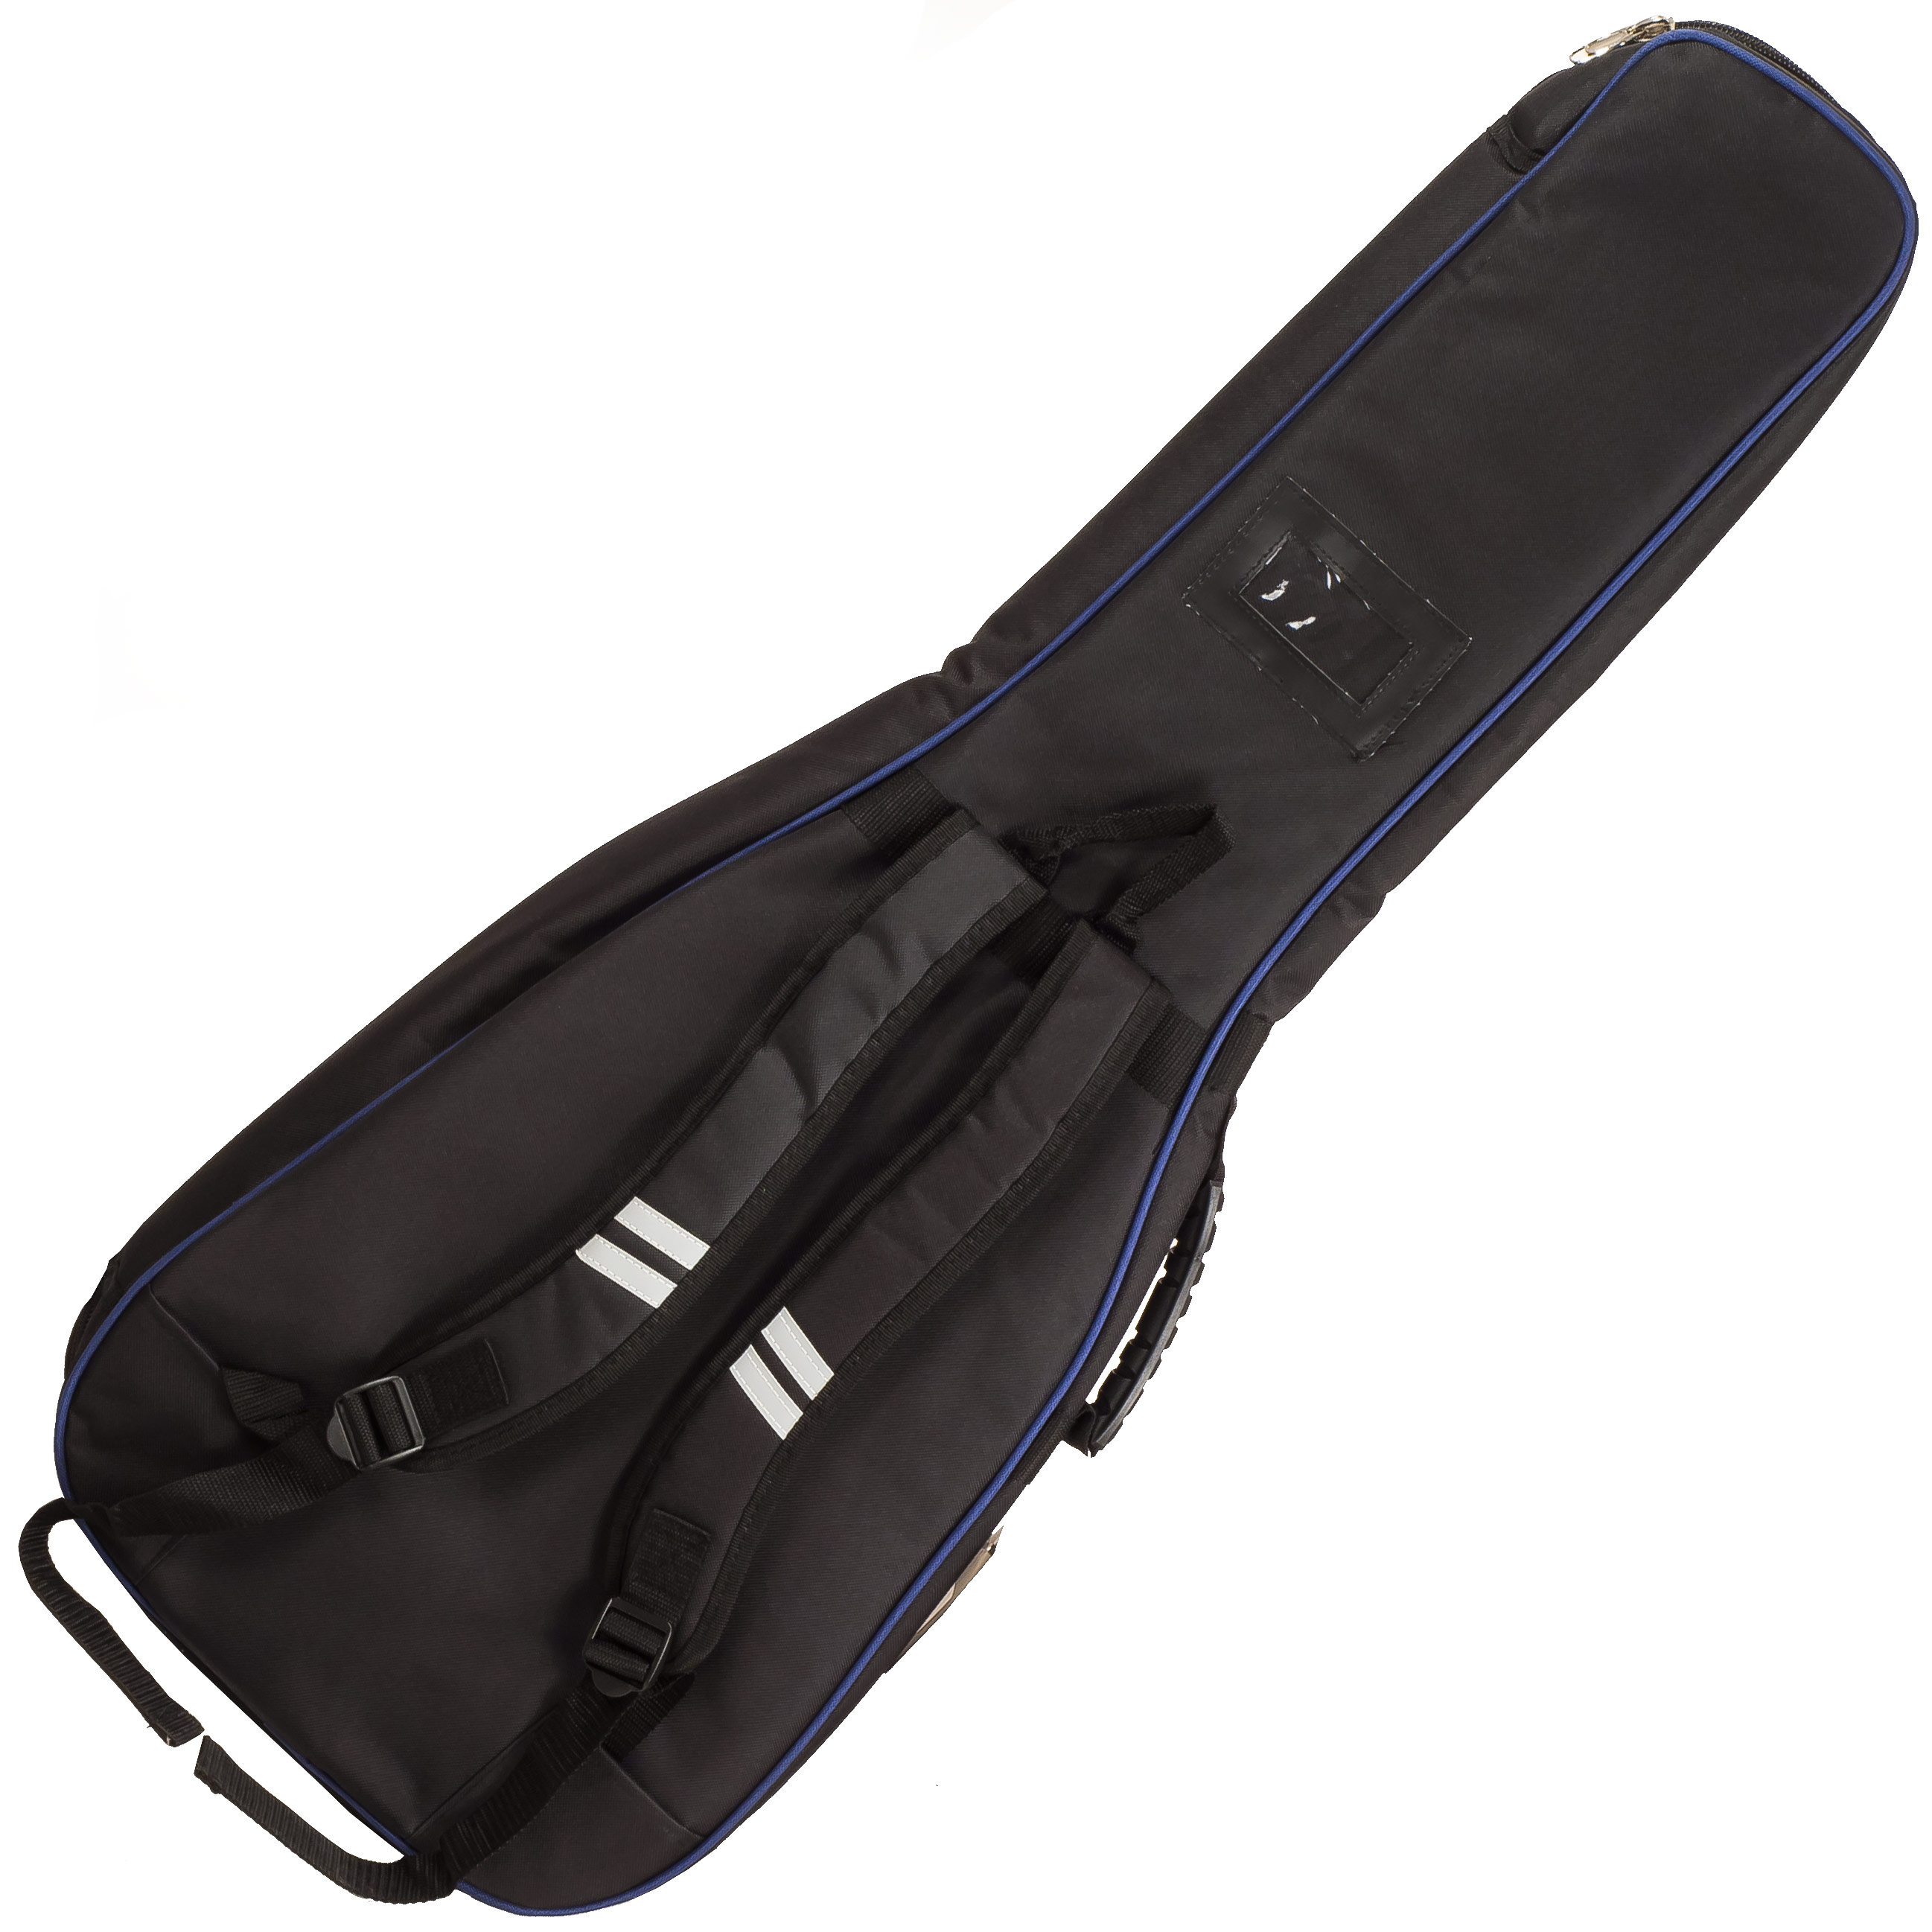 X-tone 2015 Ele-bk Nylon 15mm Electric Guitar Bag Black (2011) - Tasche für E-Gitarren - Variation 1